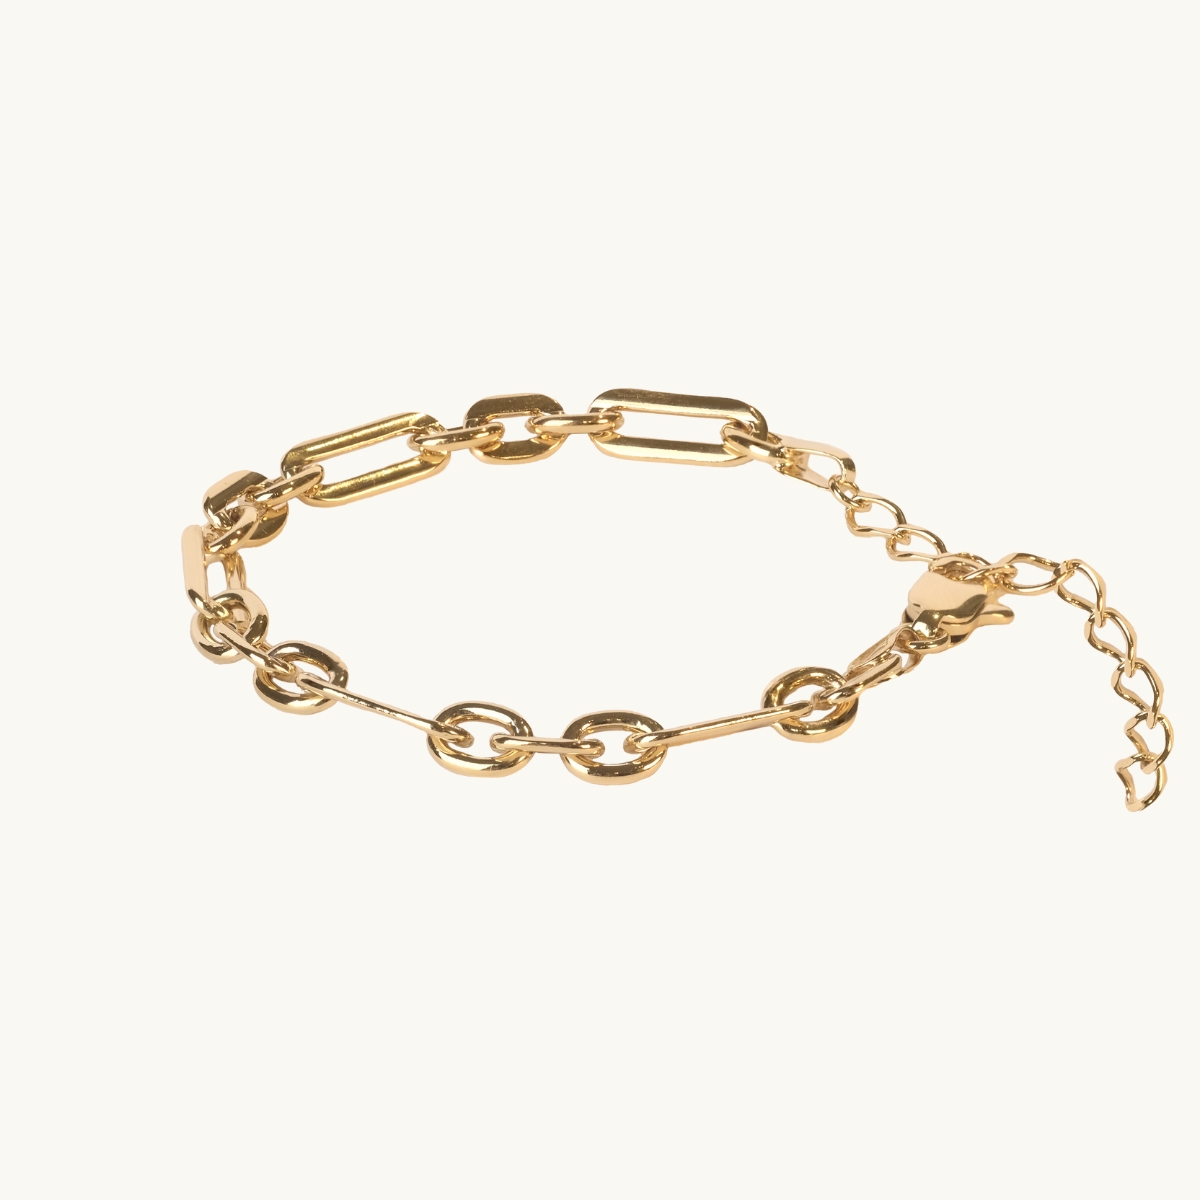 A gold bracelet with links